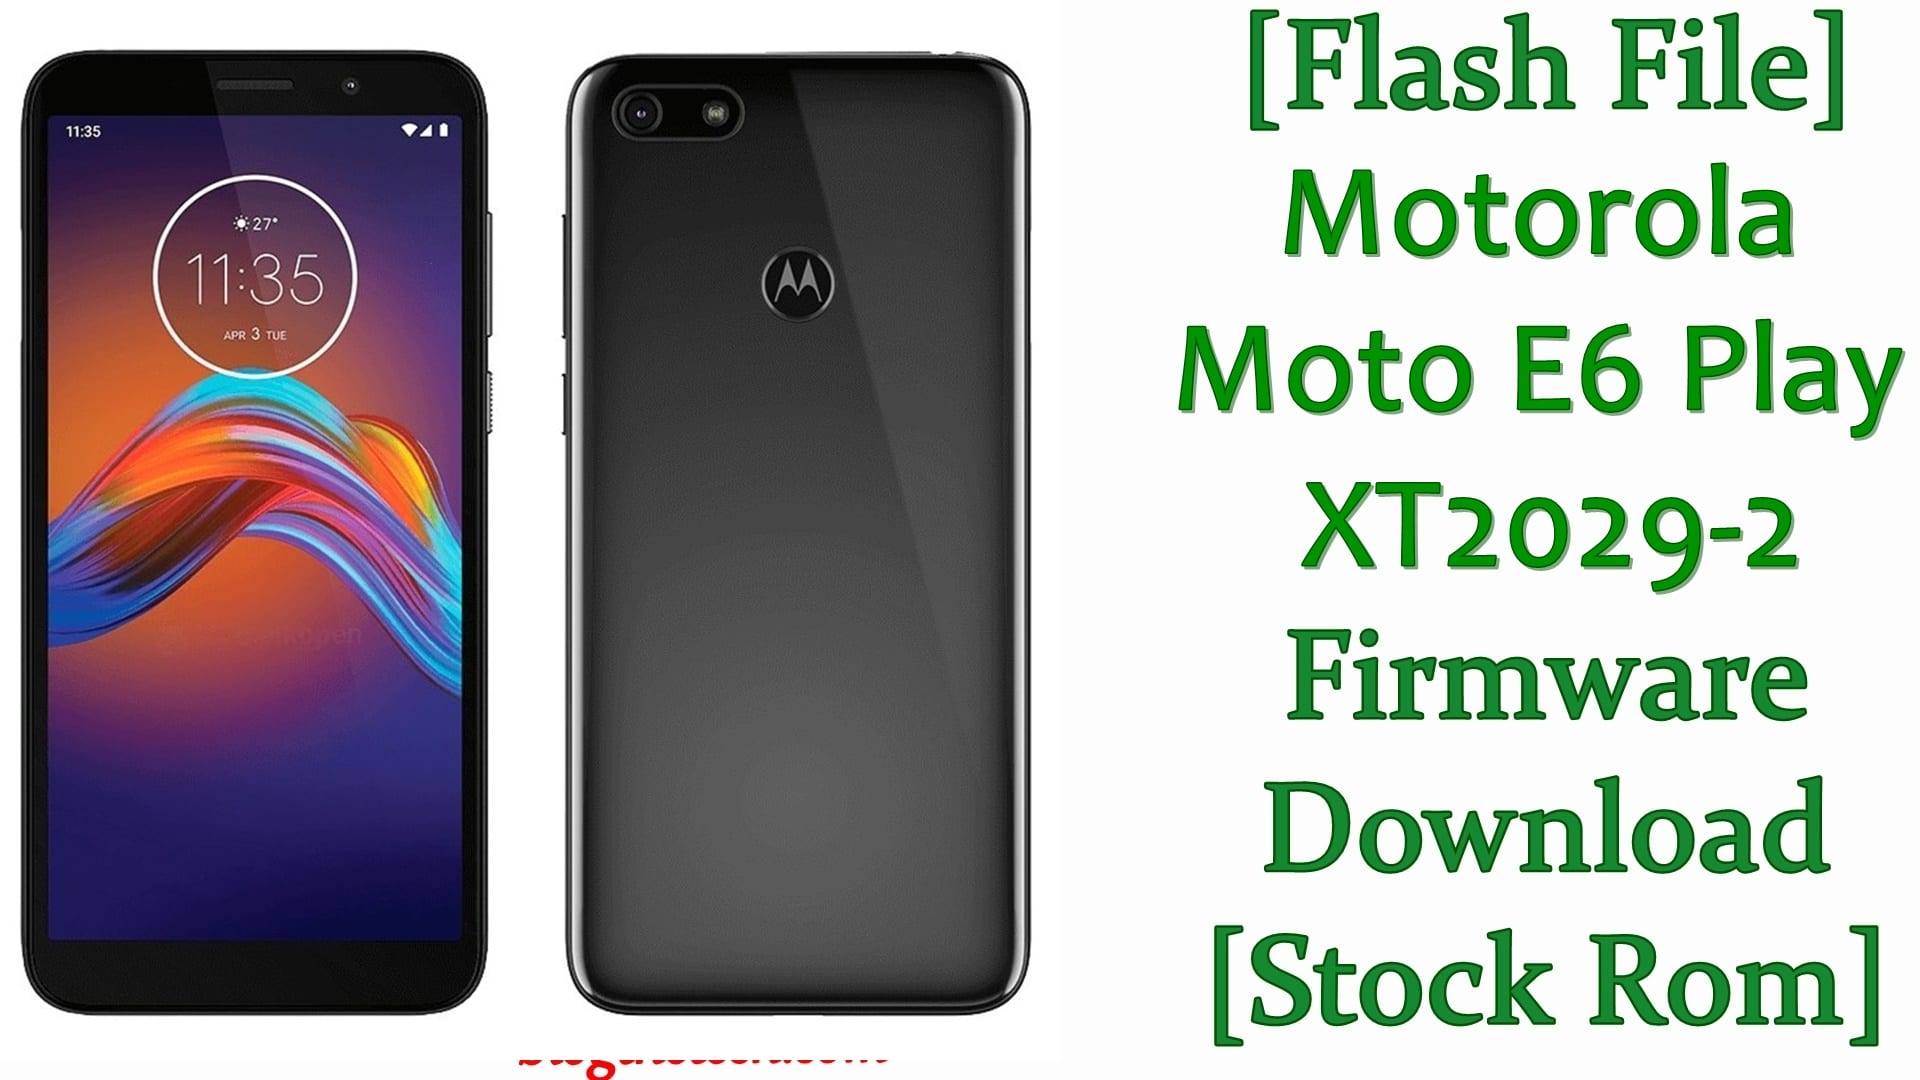 Motorola Moto E6 Play XT2029-2 Firmware